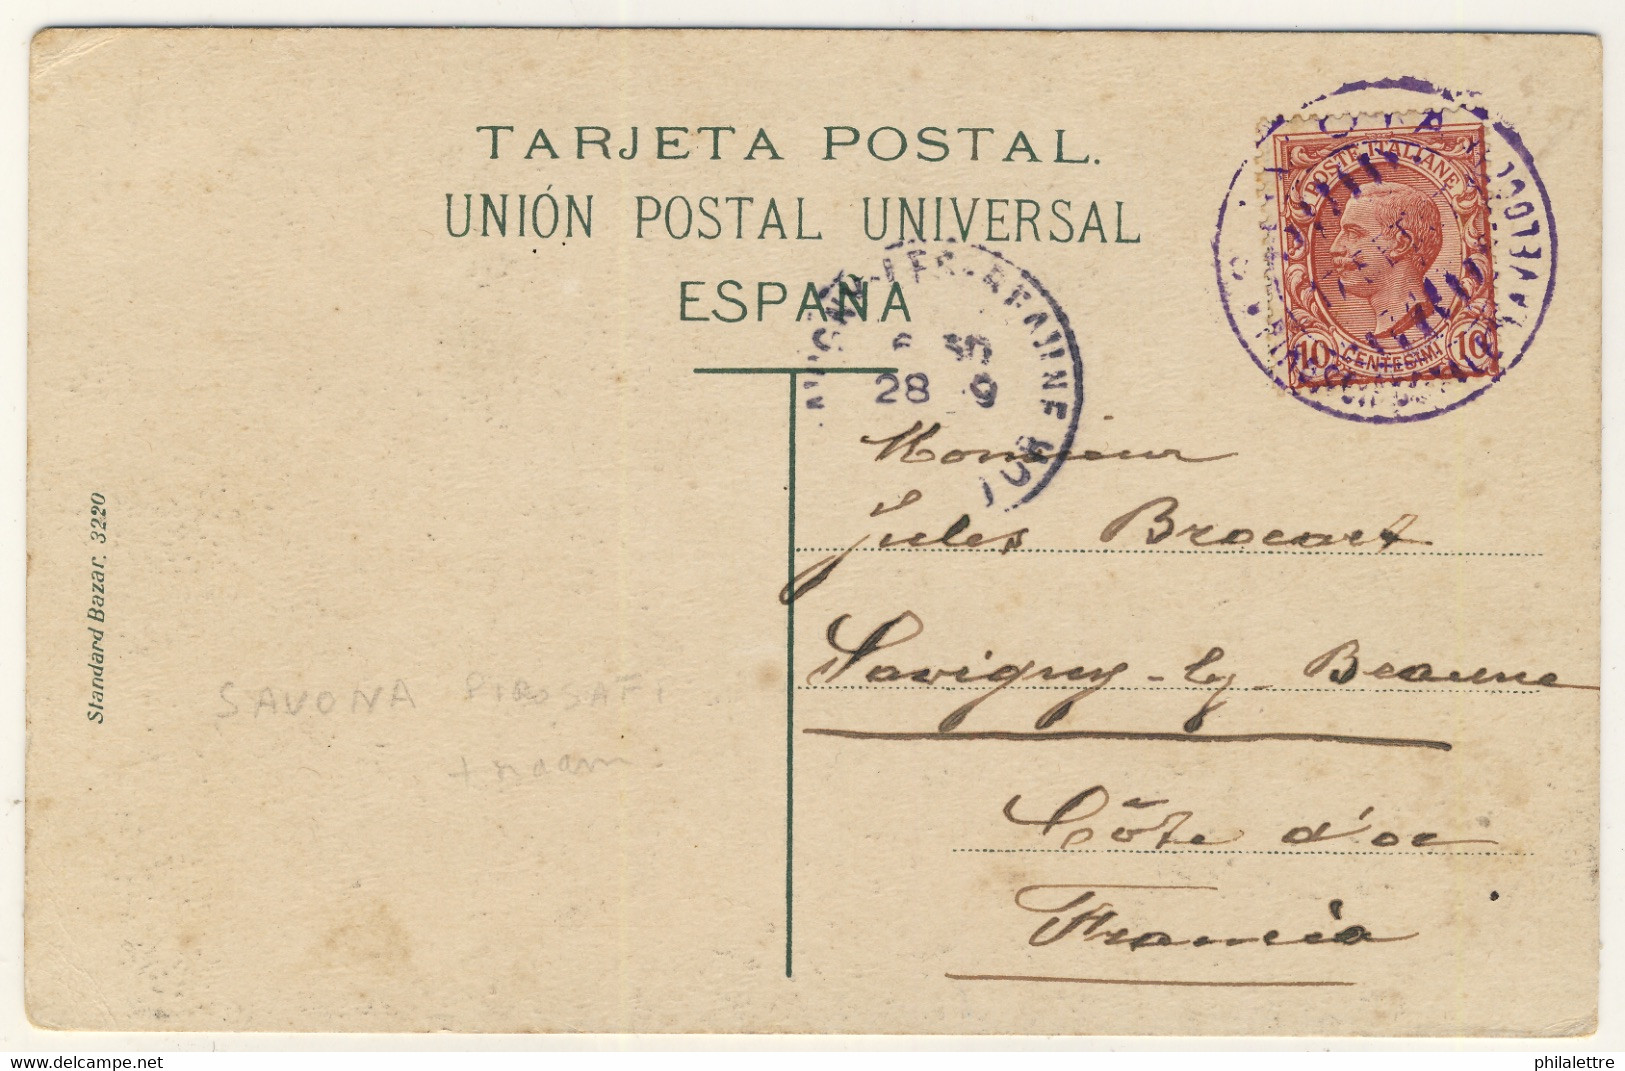 ITALIE / ITALIA 1907 " SAVONA - PIROSC. POSTALE LA VELOCE " Cartolina Da Tenerife A Savigny-les-Beaune, Francia - Storia Postale